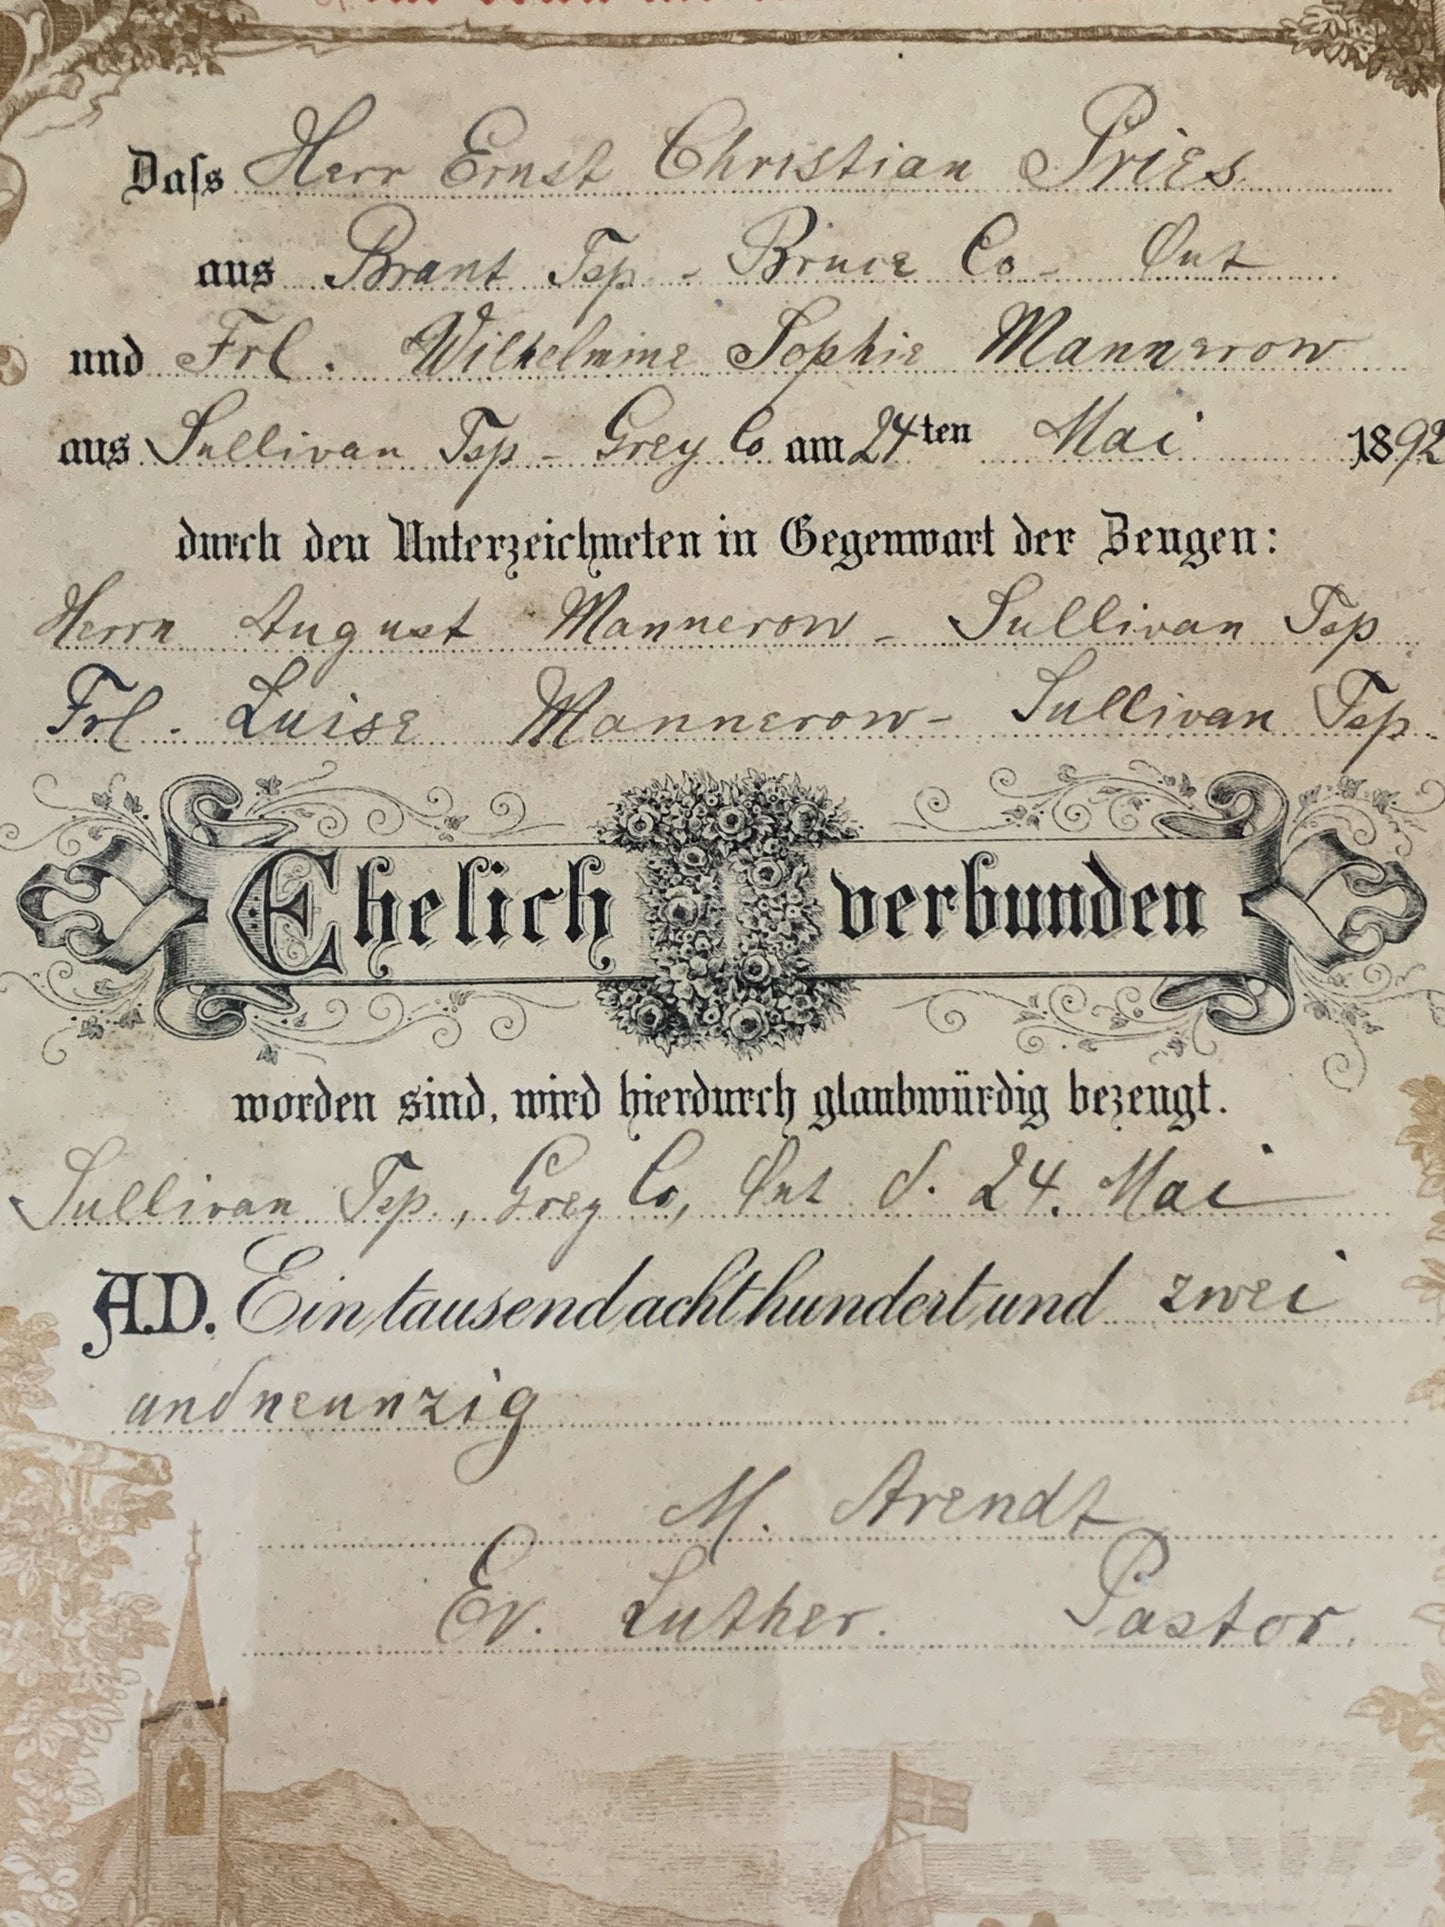 Antique Birth Certificate 1892 Framed Certificate of Birth